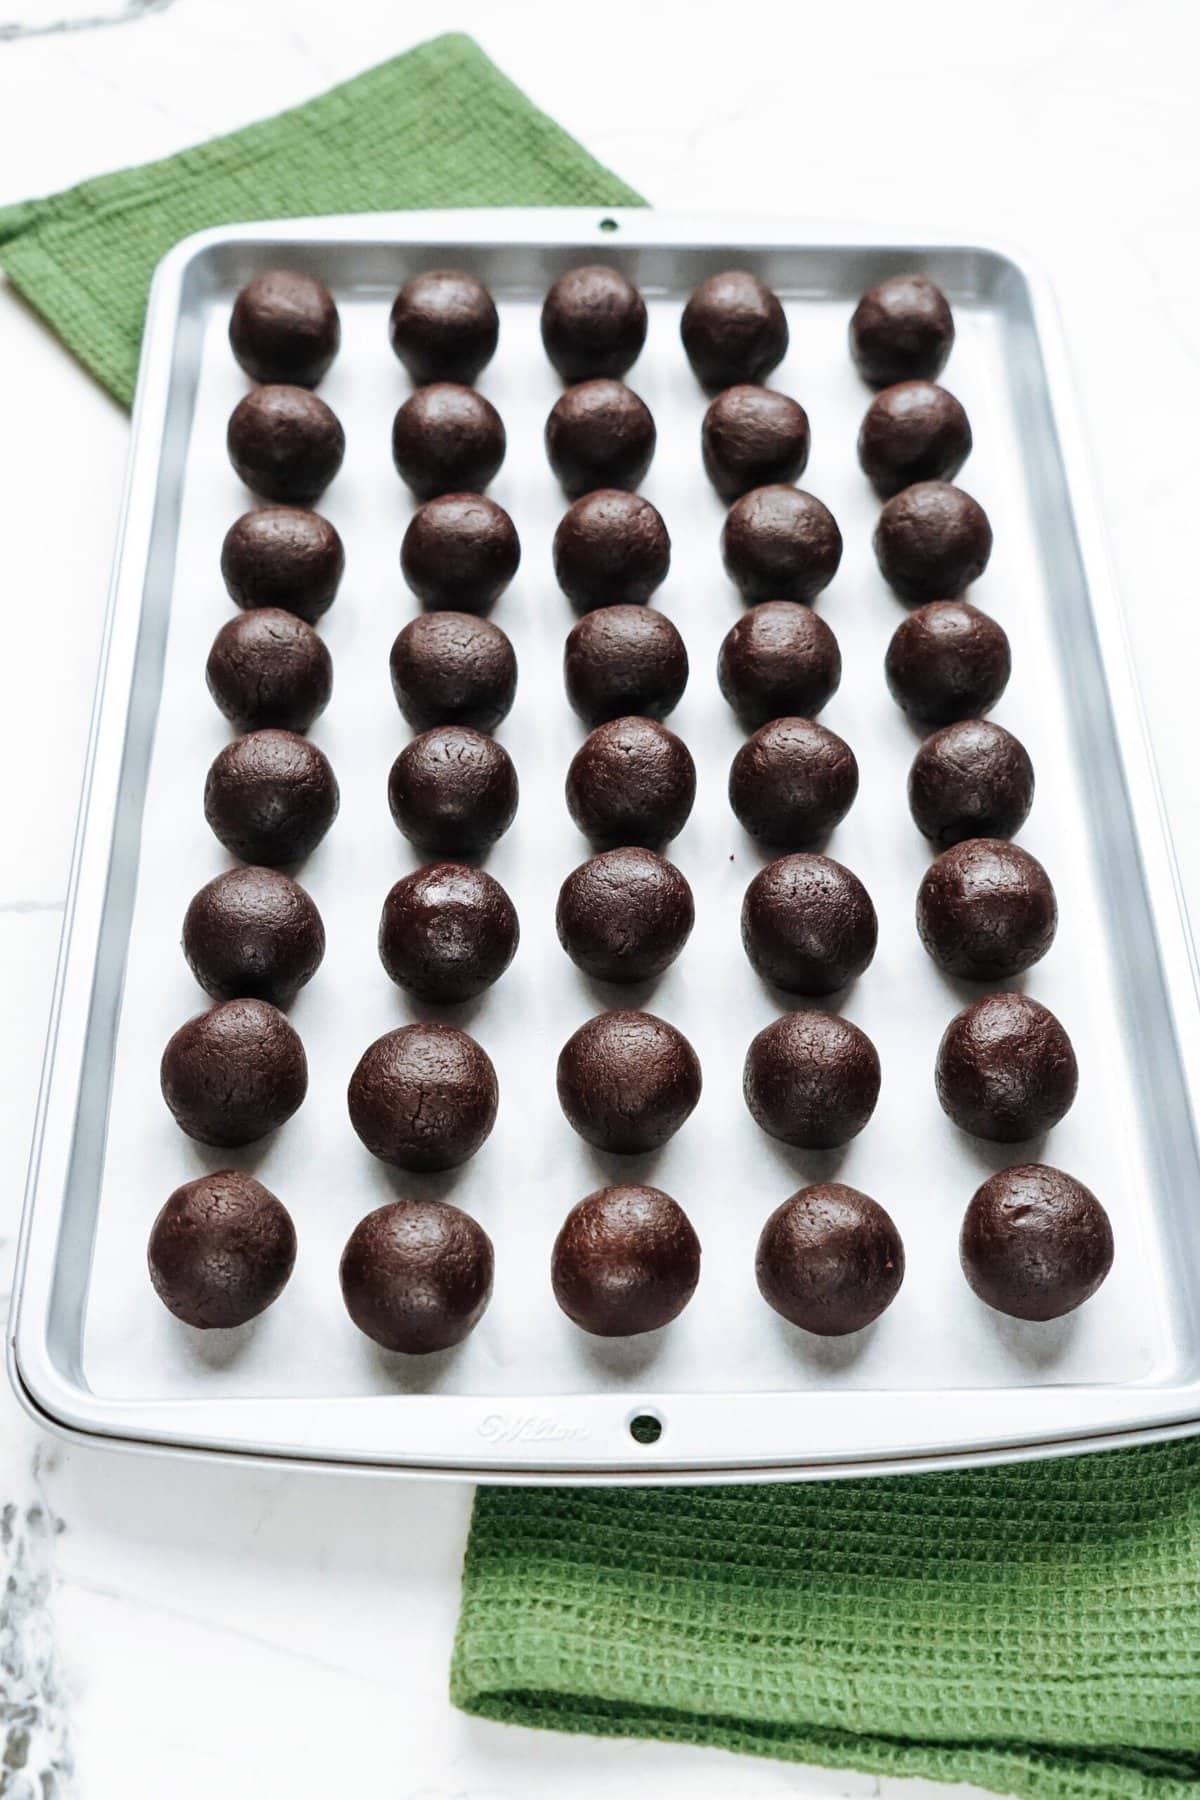 Chocolate truffles on a baking sheet.